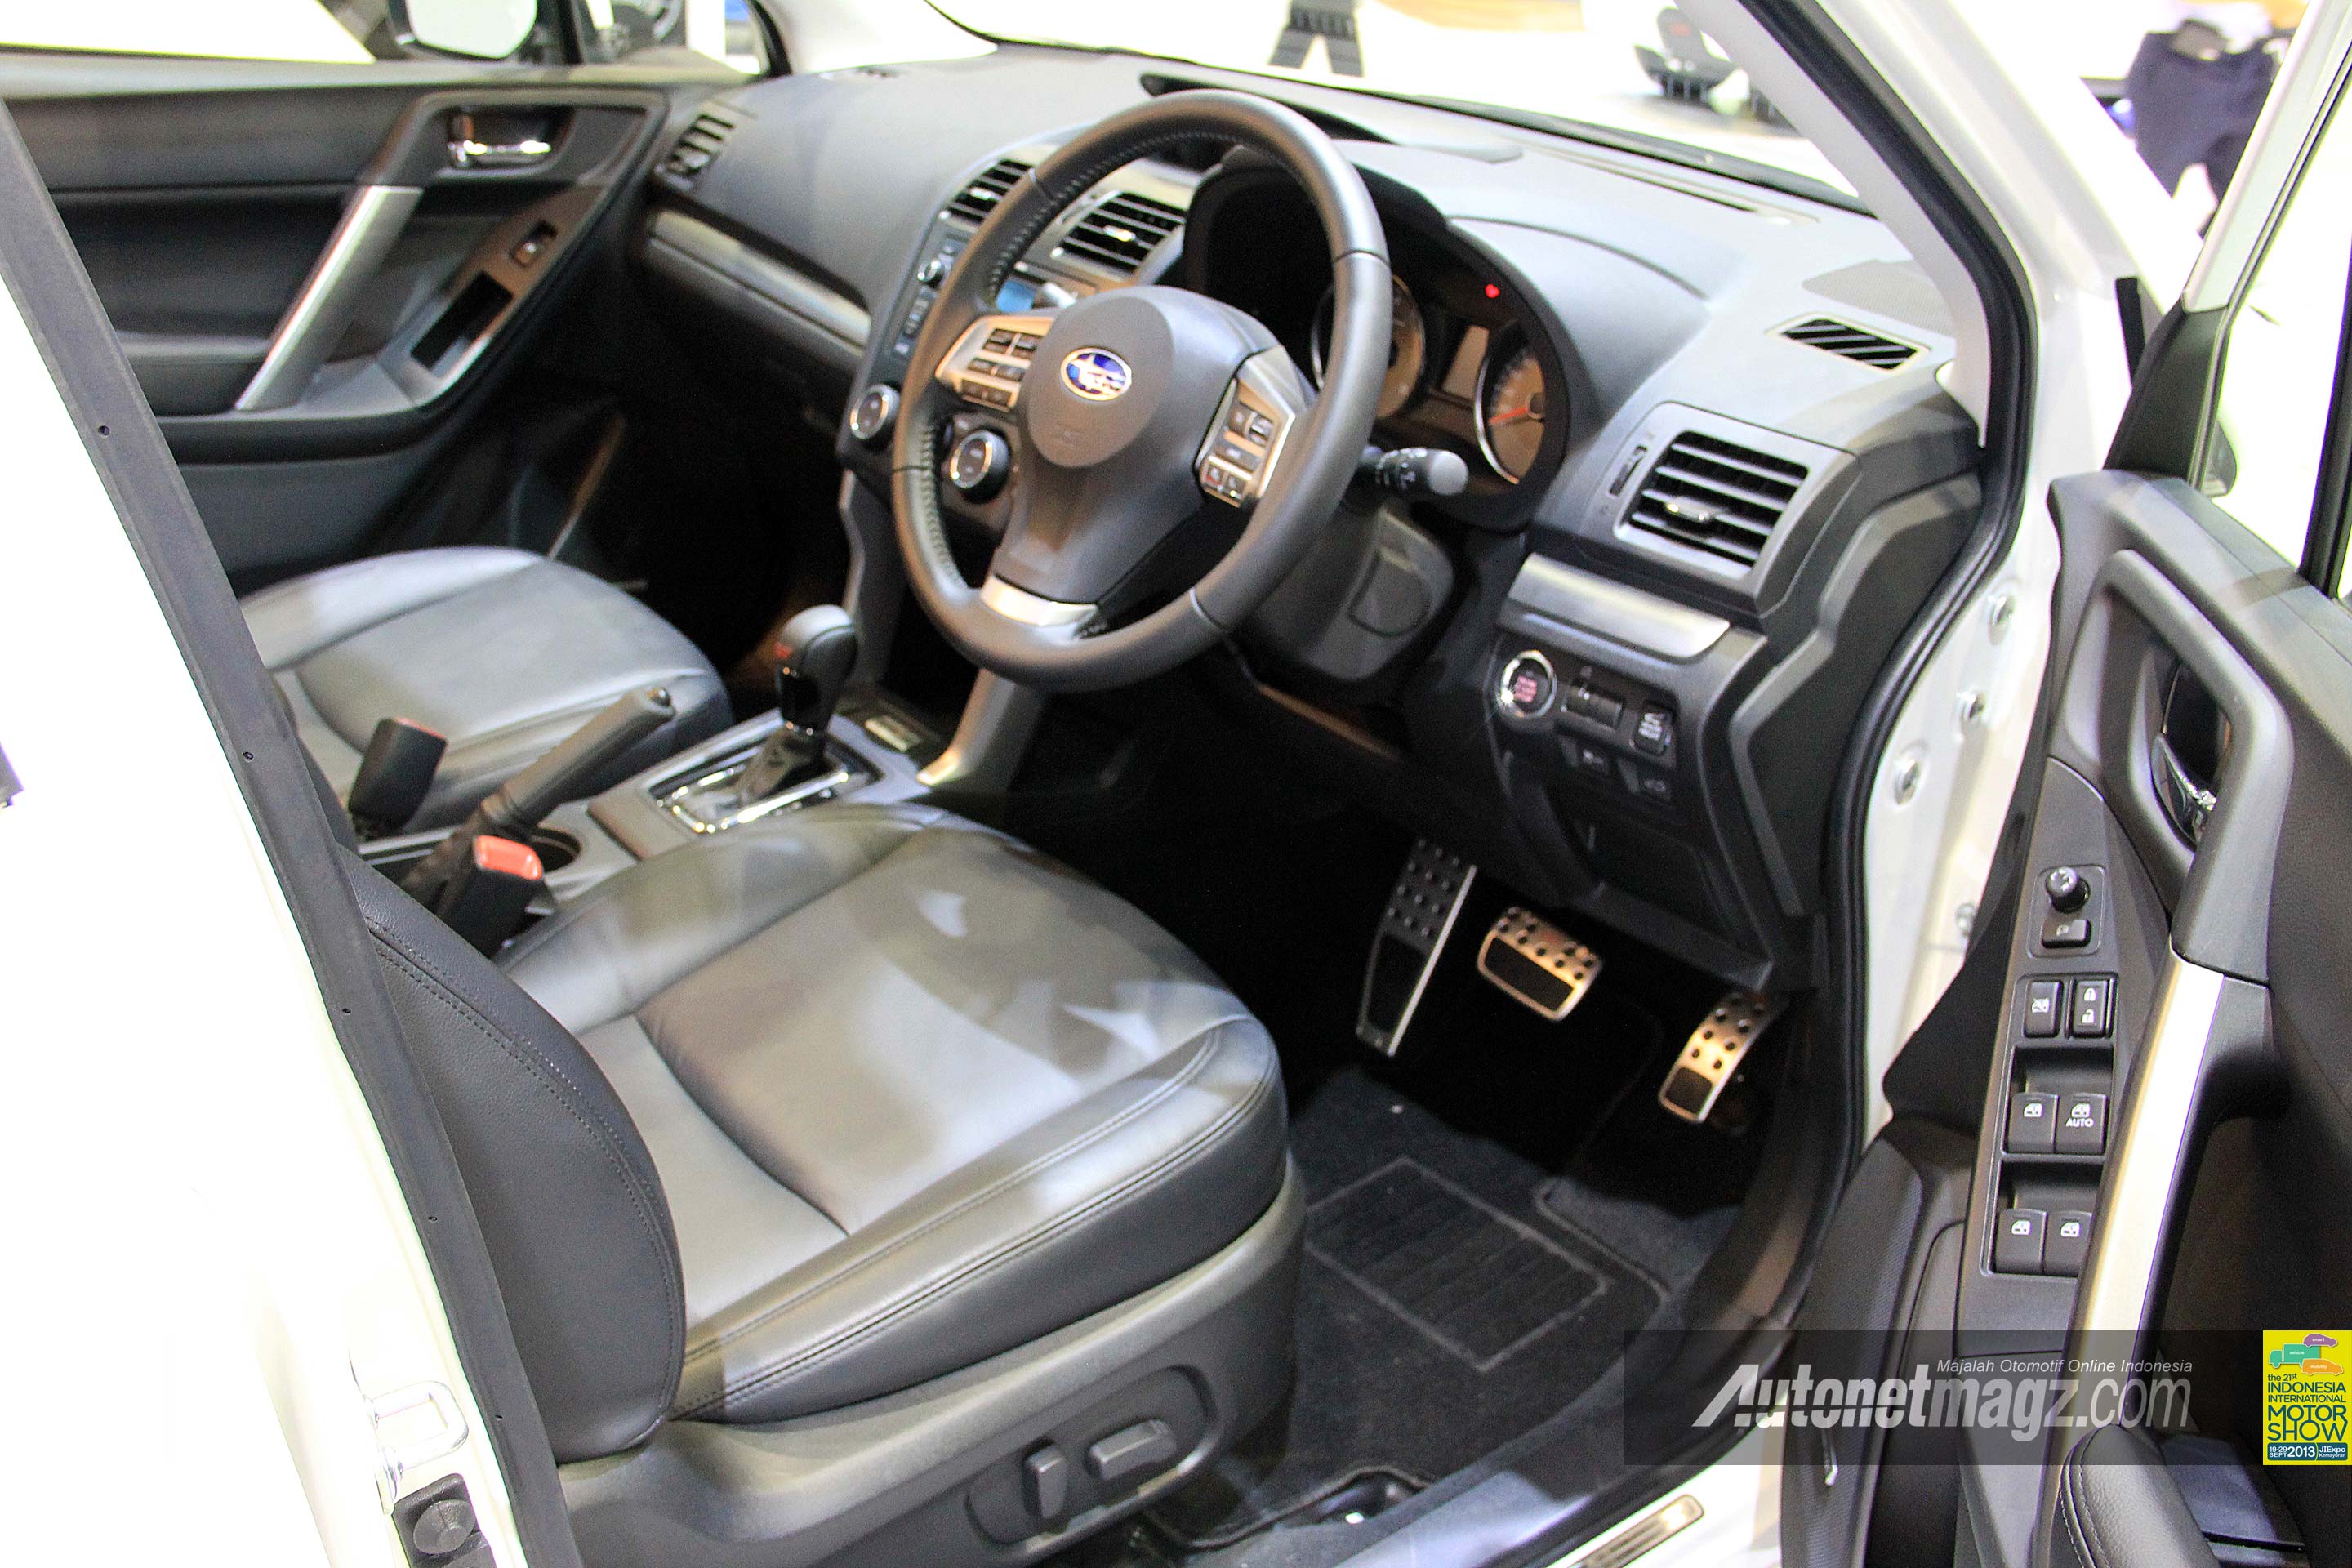 IIMS 2013, Interior Subaru All-new Forester 2.0XT: Subaru All-New Forester Diluncurkan Di IIMS 2013